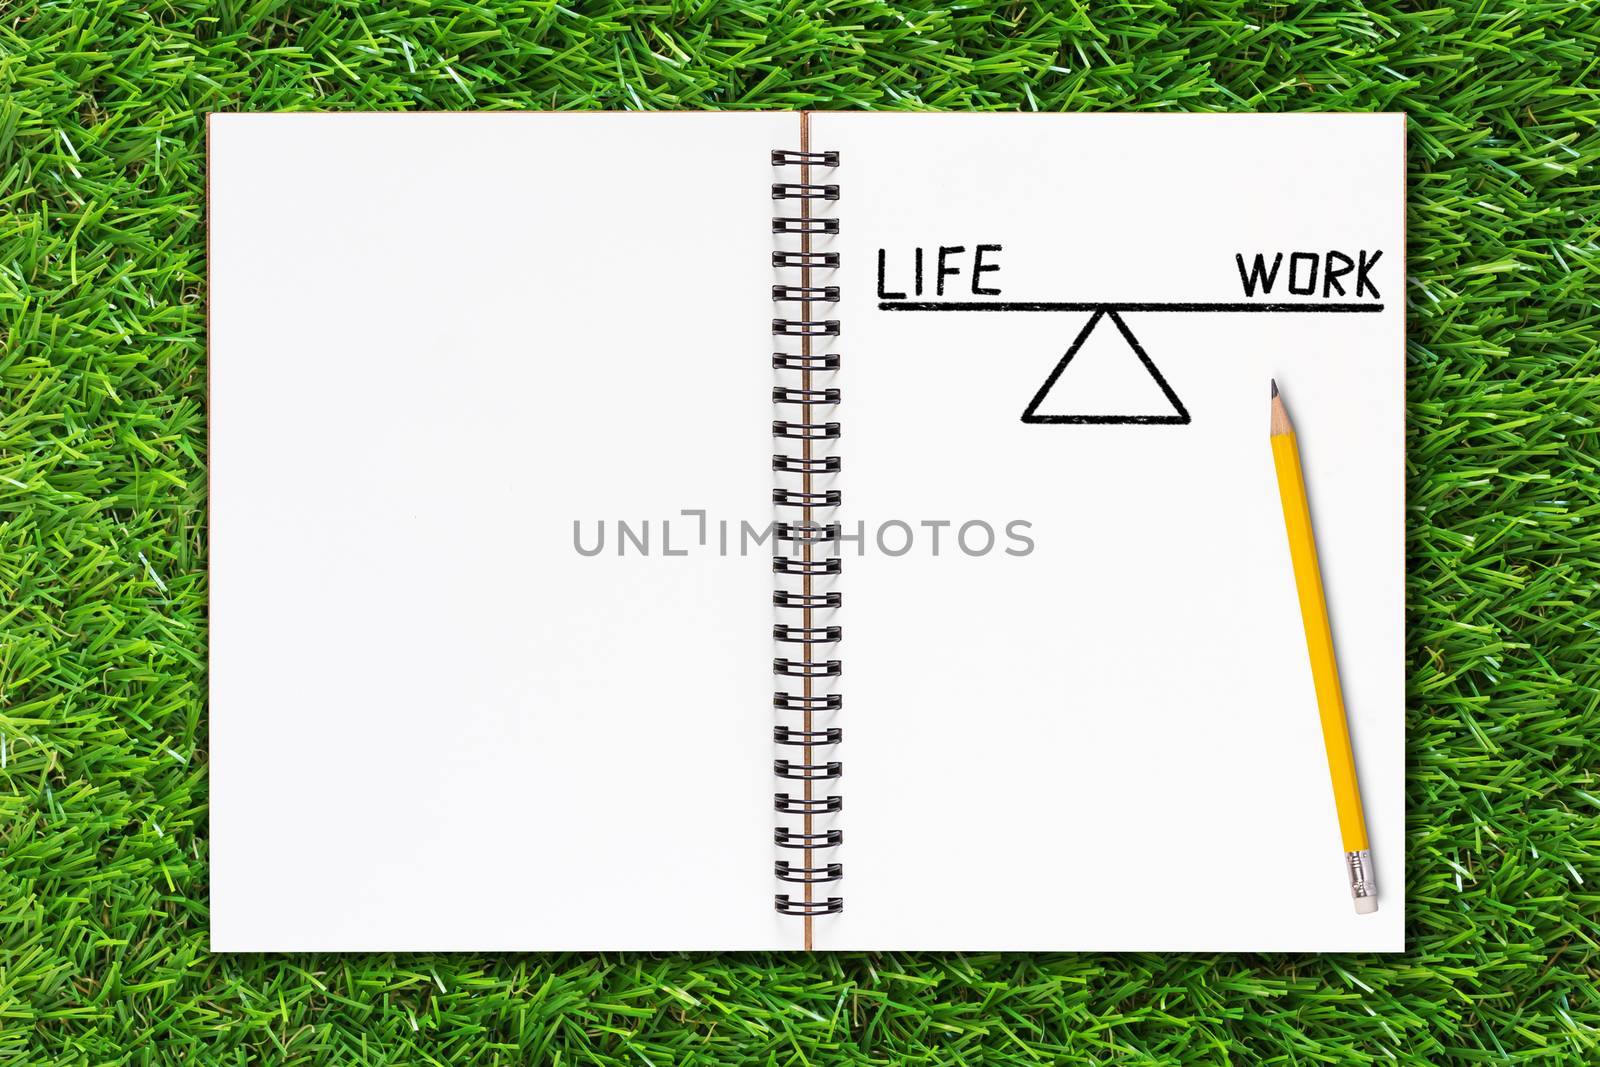 Work life balance concept, business management